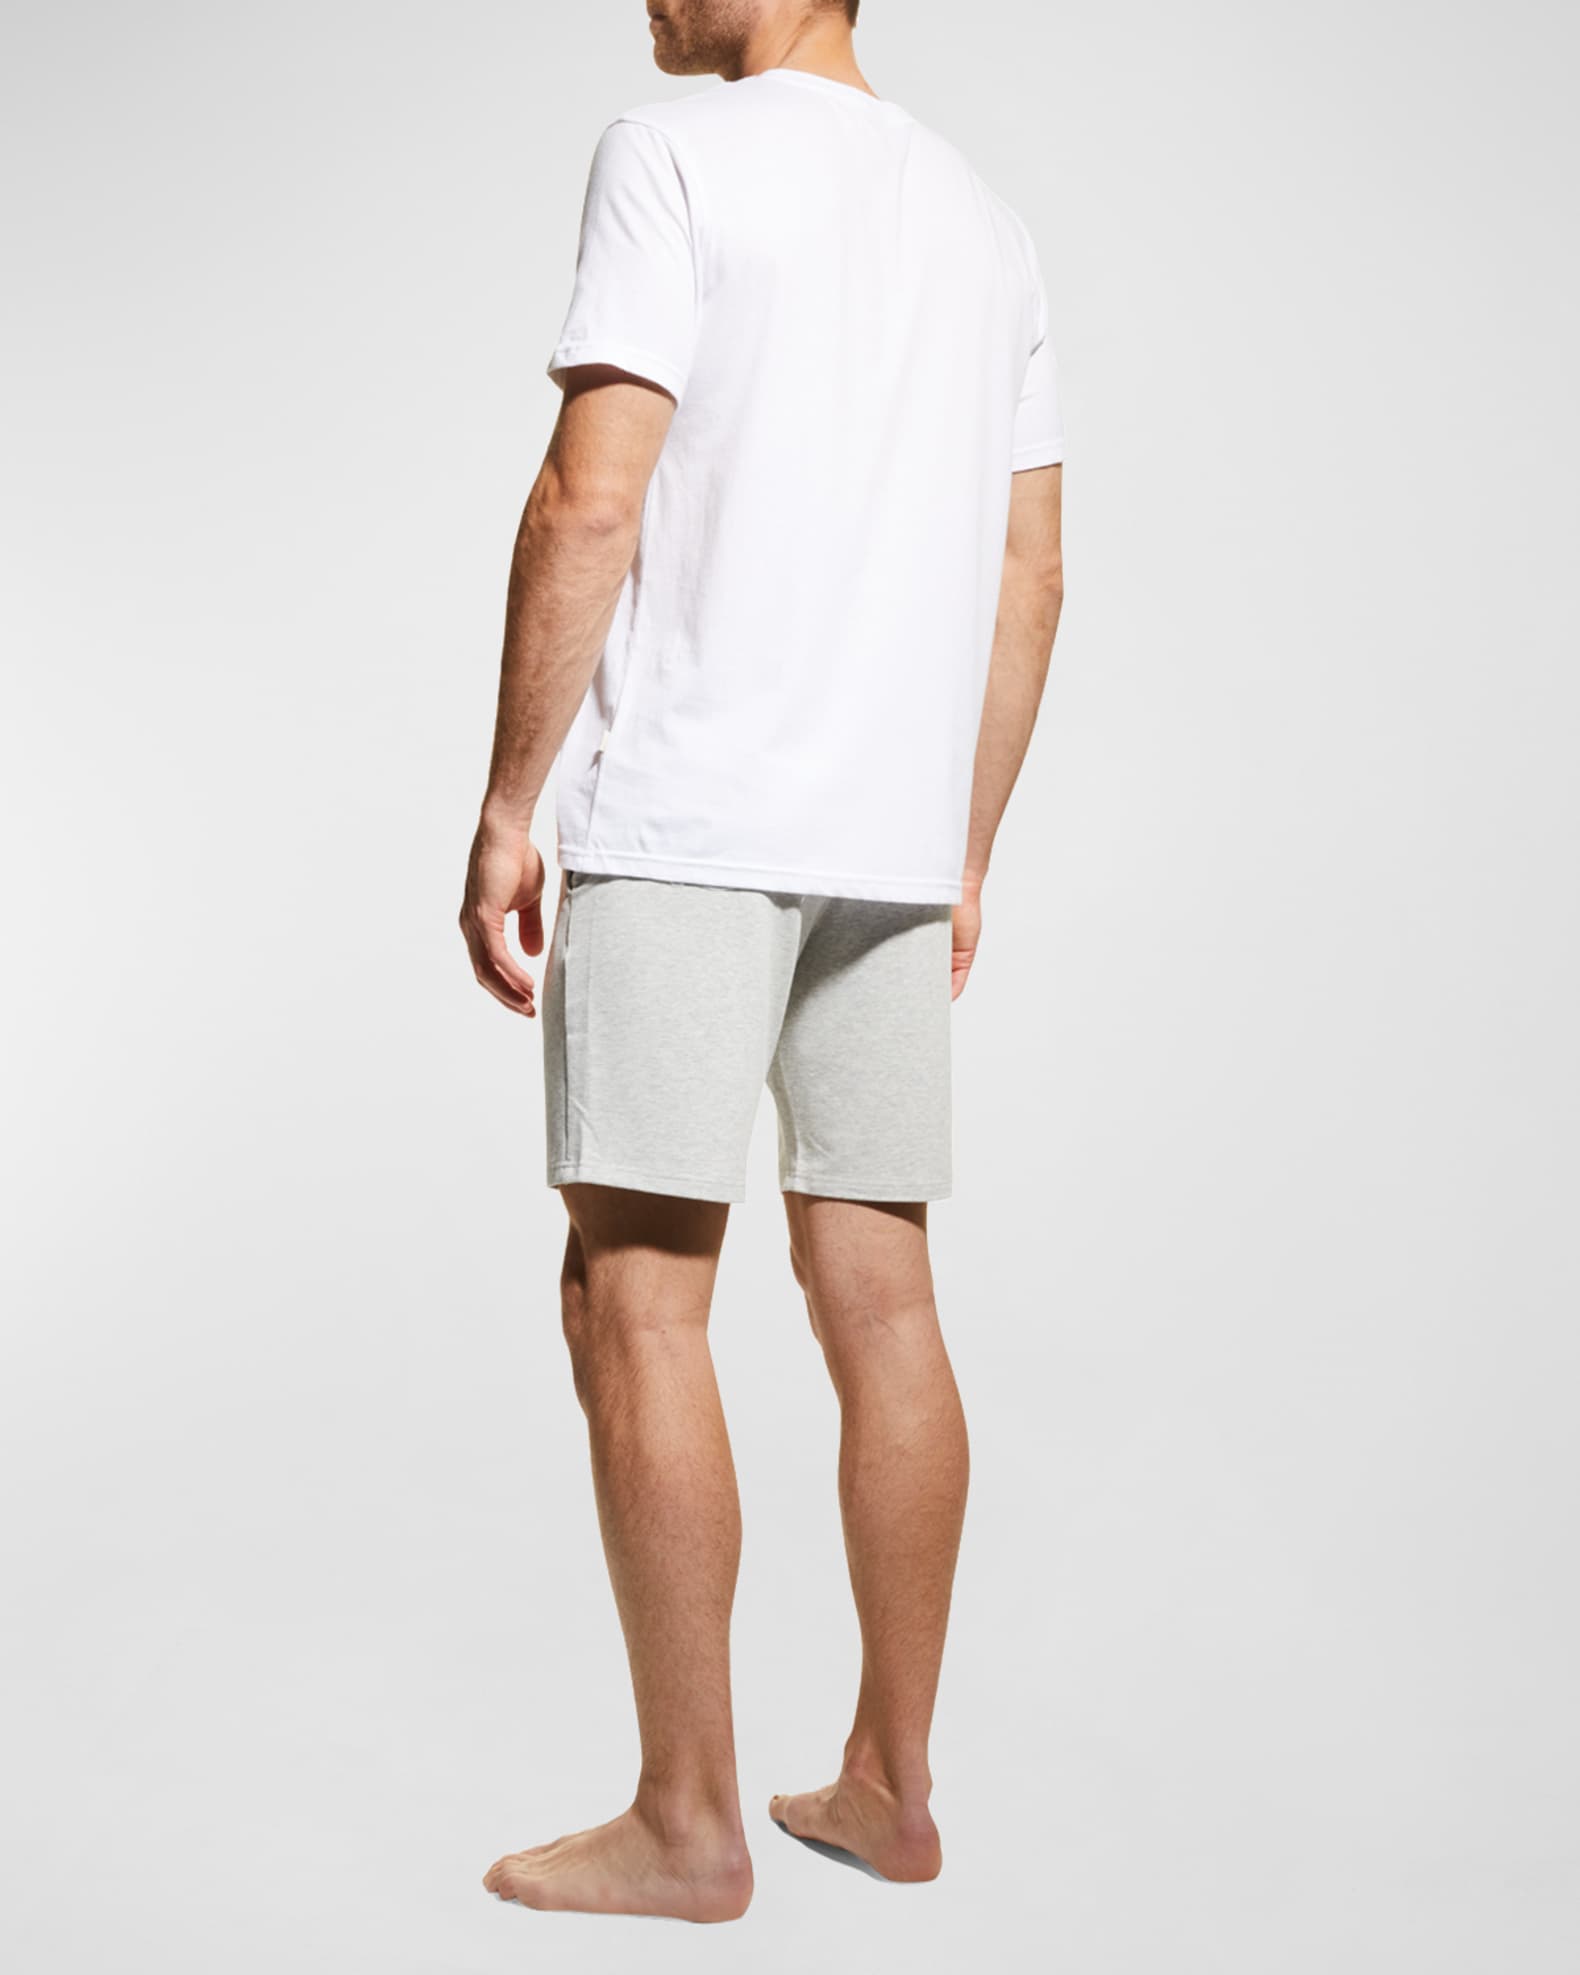 UGG Men's Darian Cotton-Stretch Pajama Set | Neiman Marcus